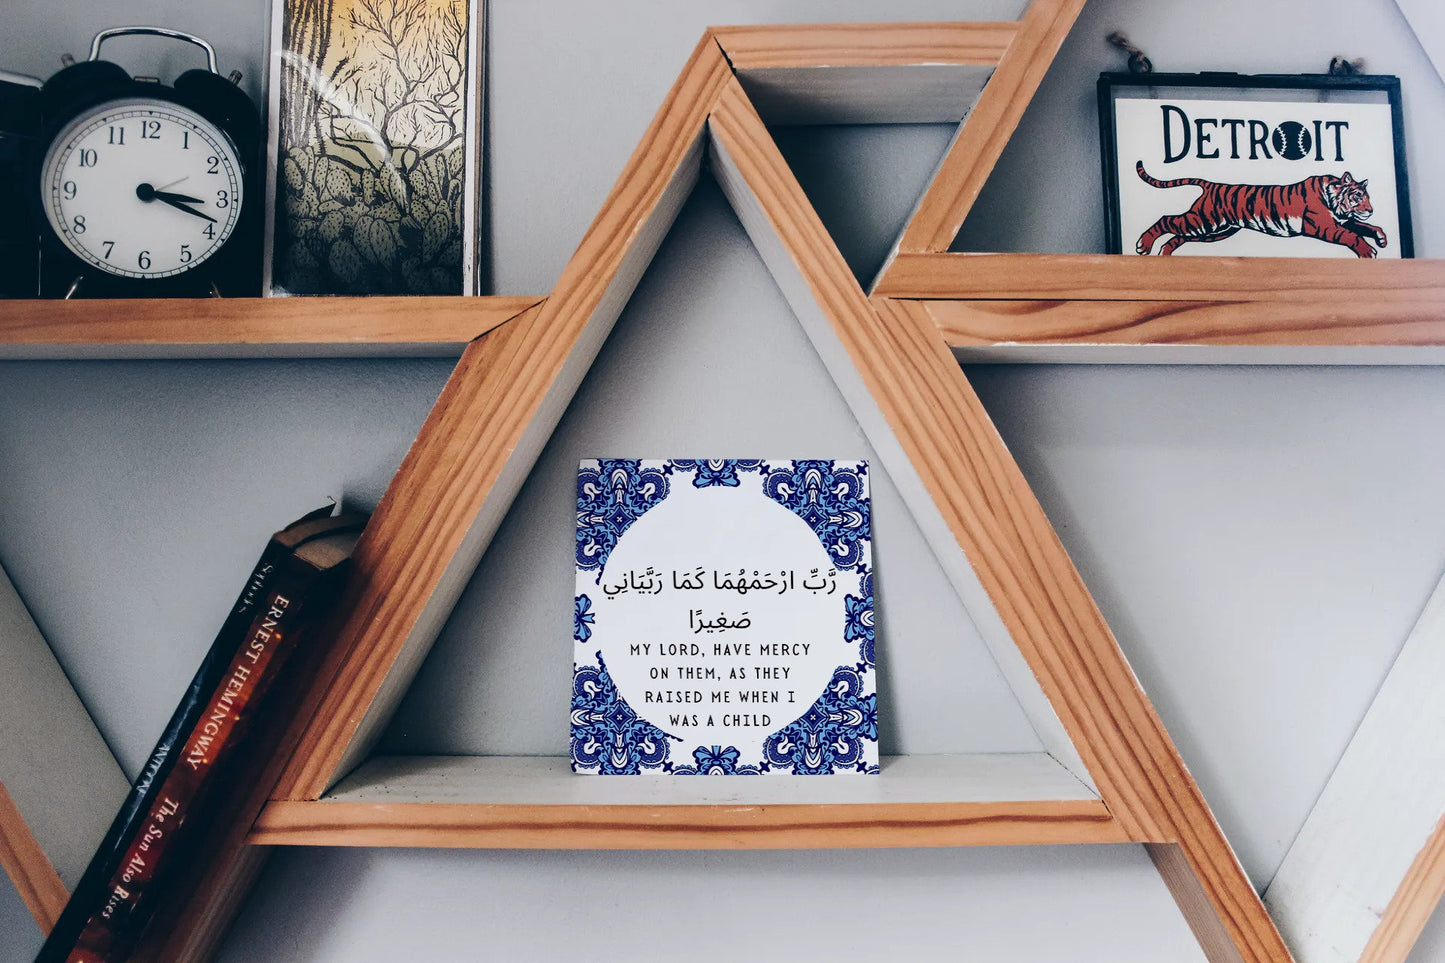 Amma Bangla Greeting card In blue paisley pattern, Bangla font Mug with arabic on back, ideal islamic coffee mug